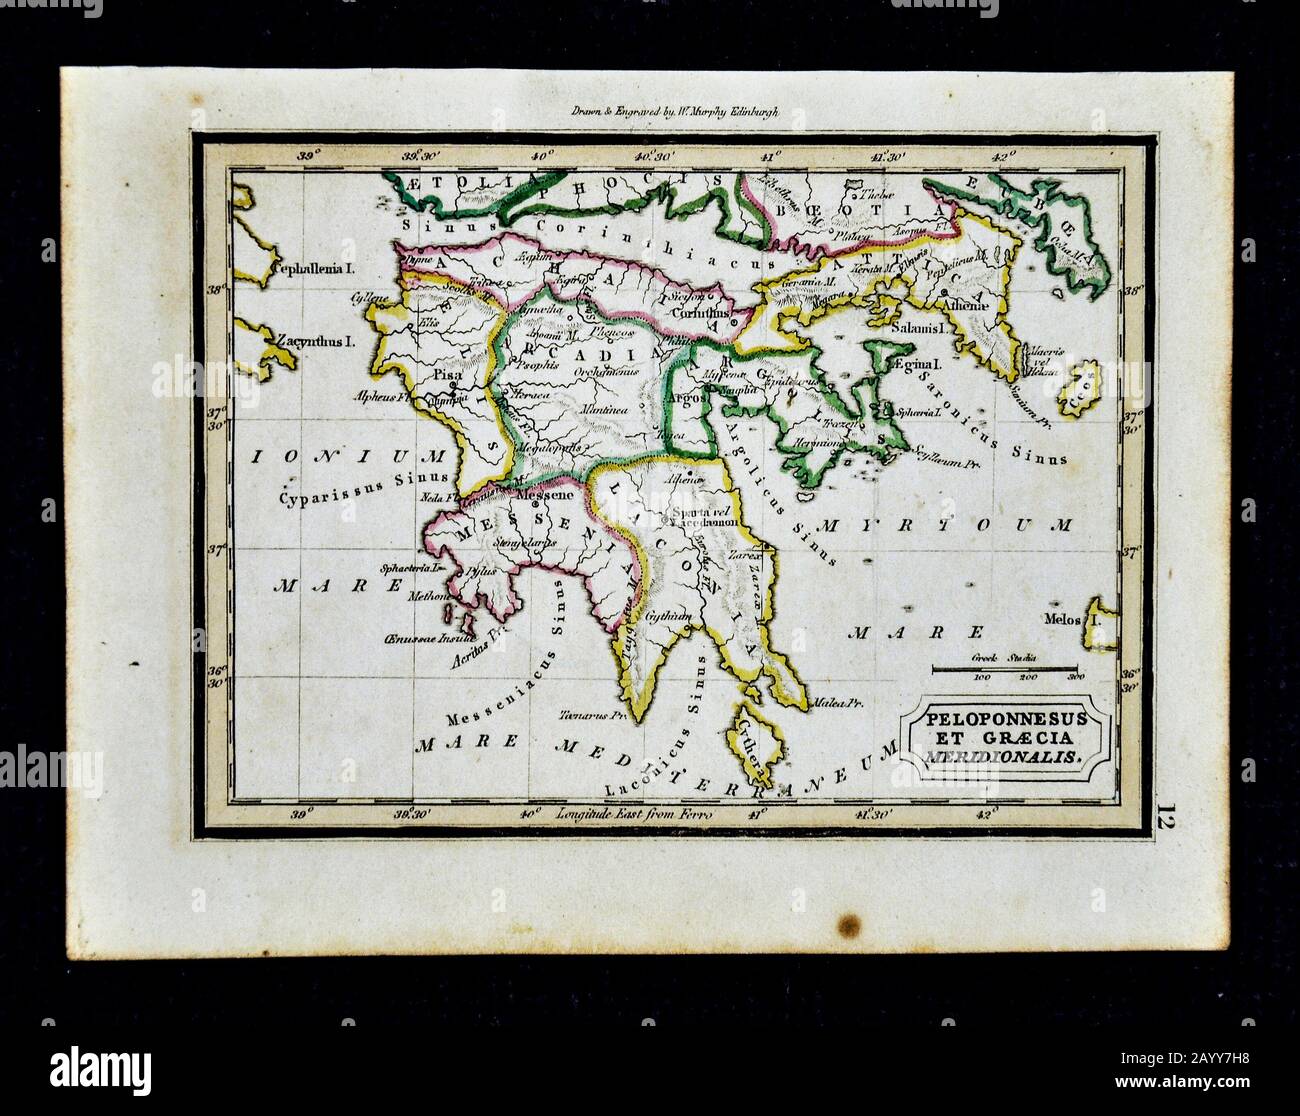 1832 Murphy-Karte Altes Griechenland - Peloponnesus et Graecia Meridionalis - Athen Sparta Korinth Cythera Stockfoto